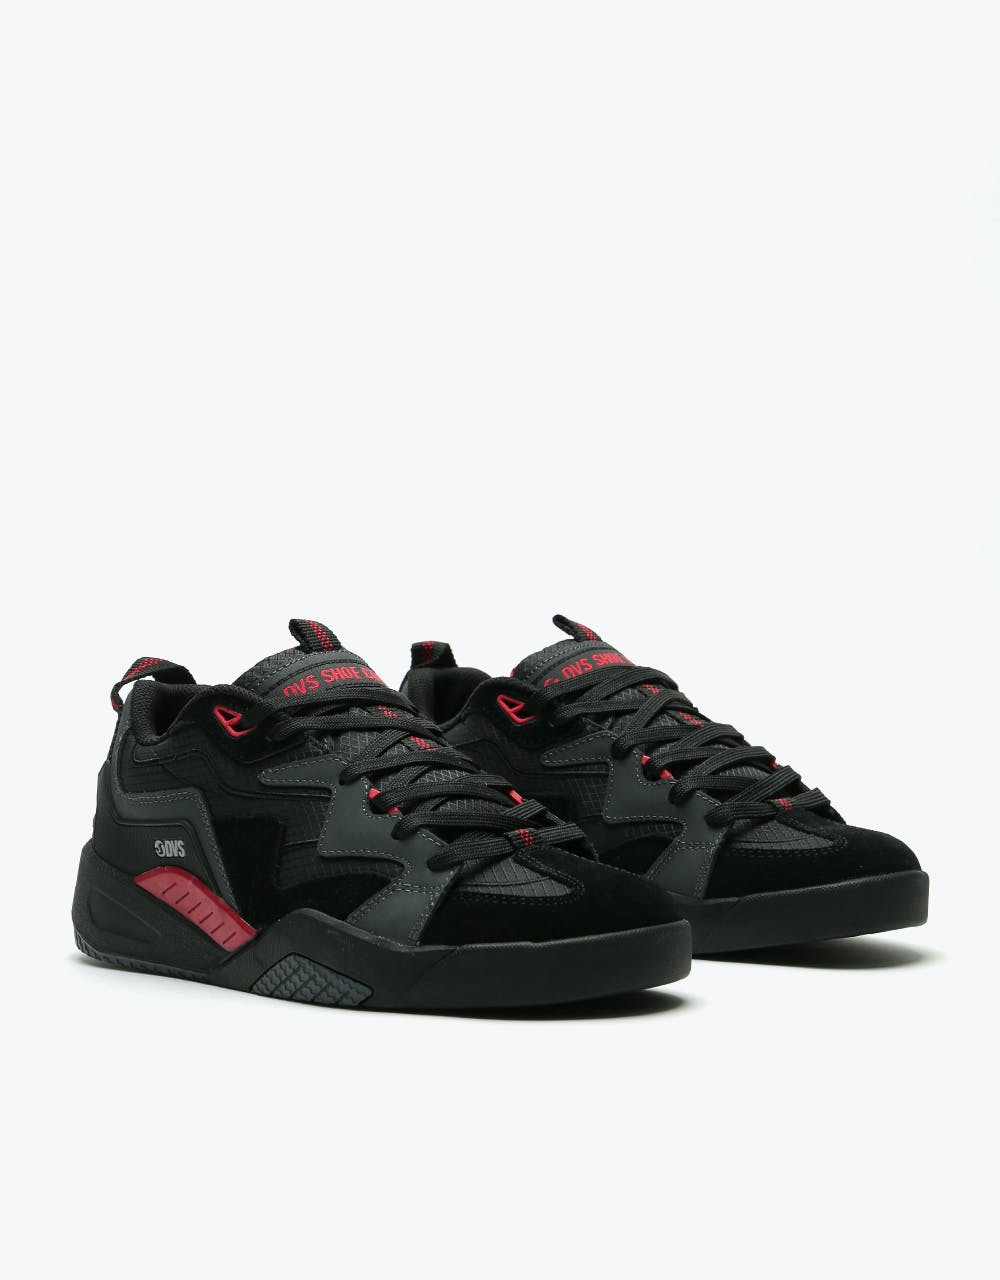 DVS Devious Skate Shoes - Charcoal/Black/Red Nubuck